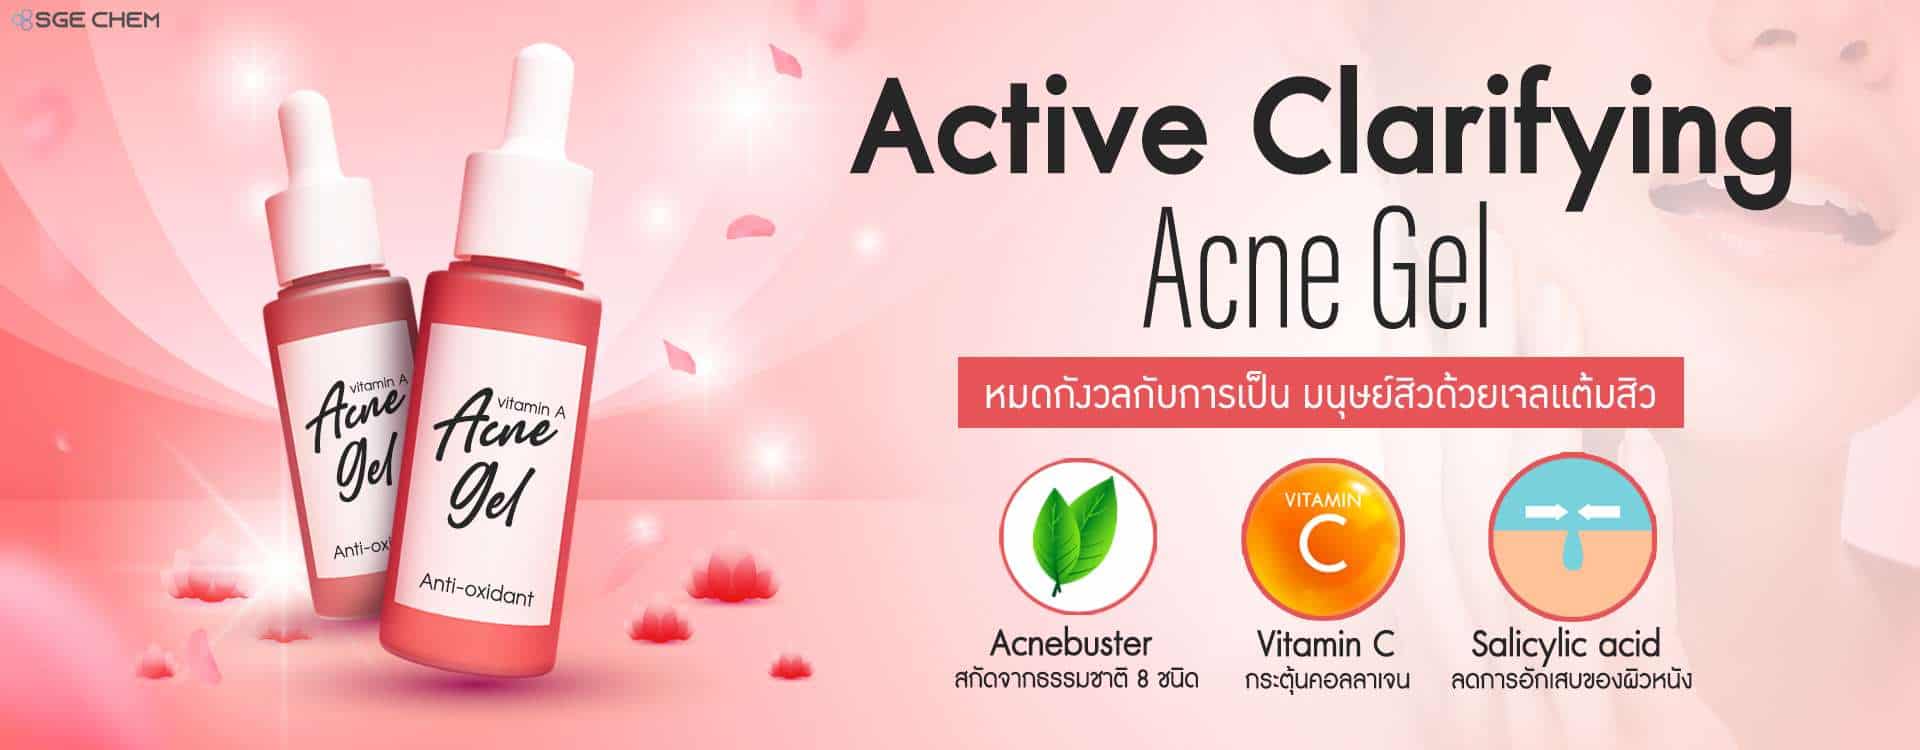 Active Clarifying Acne Gel